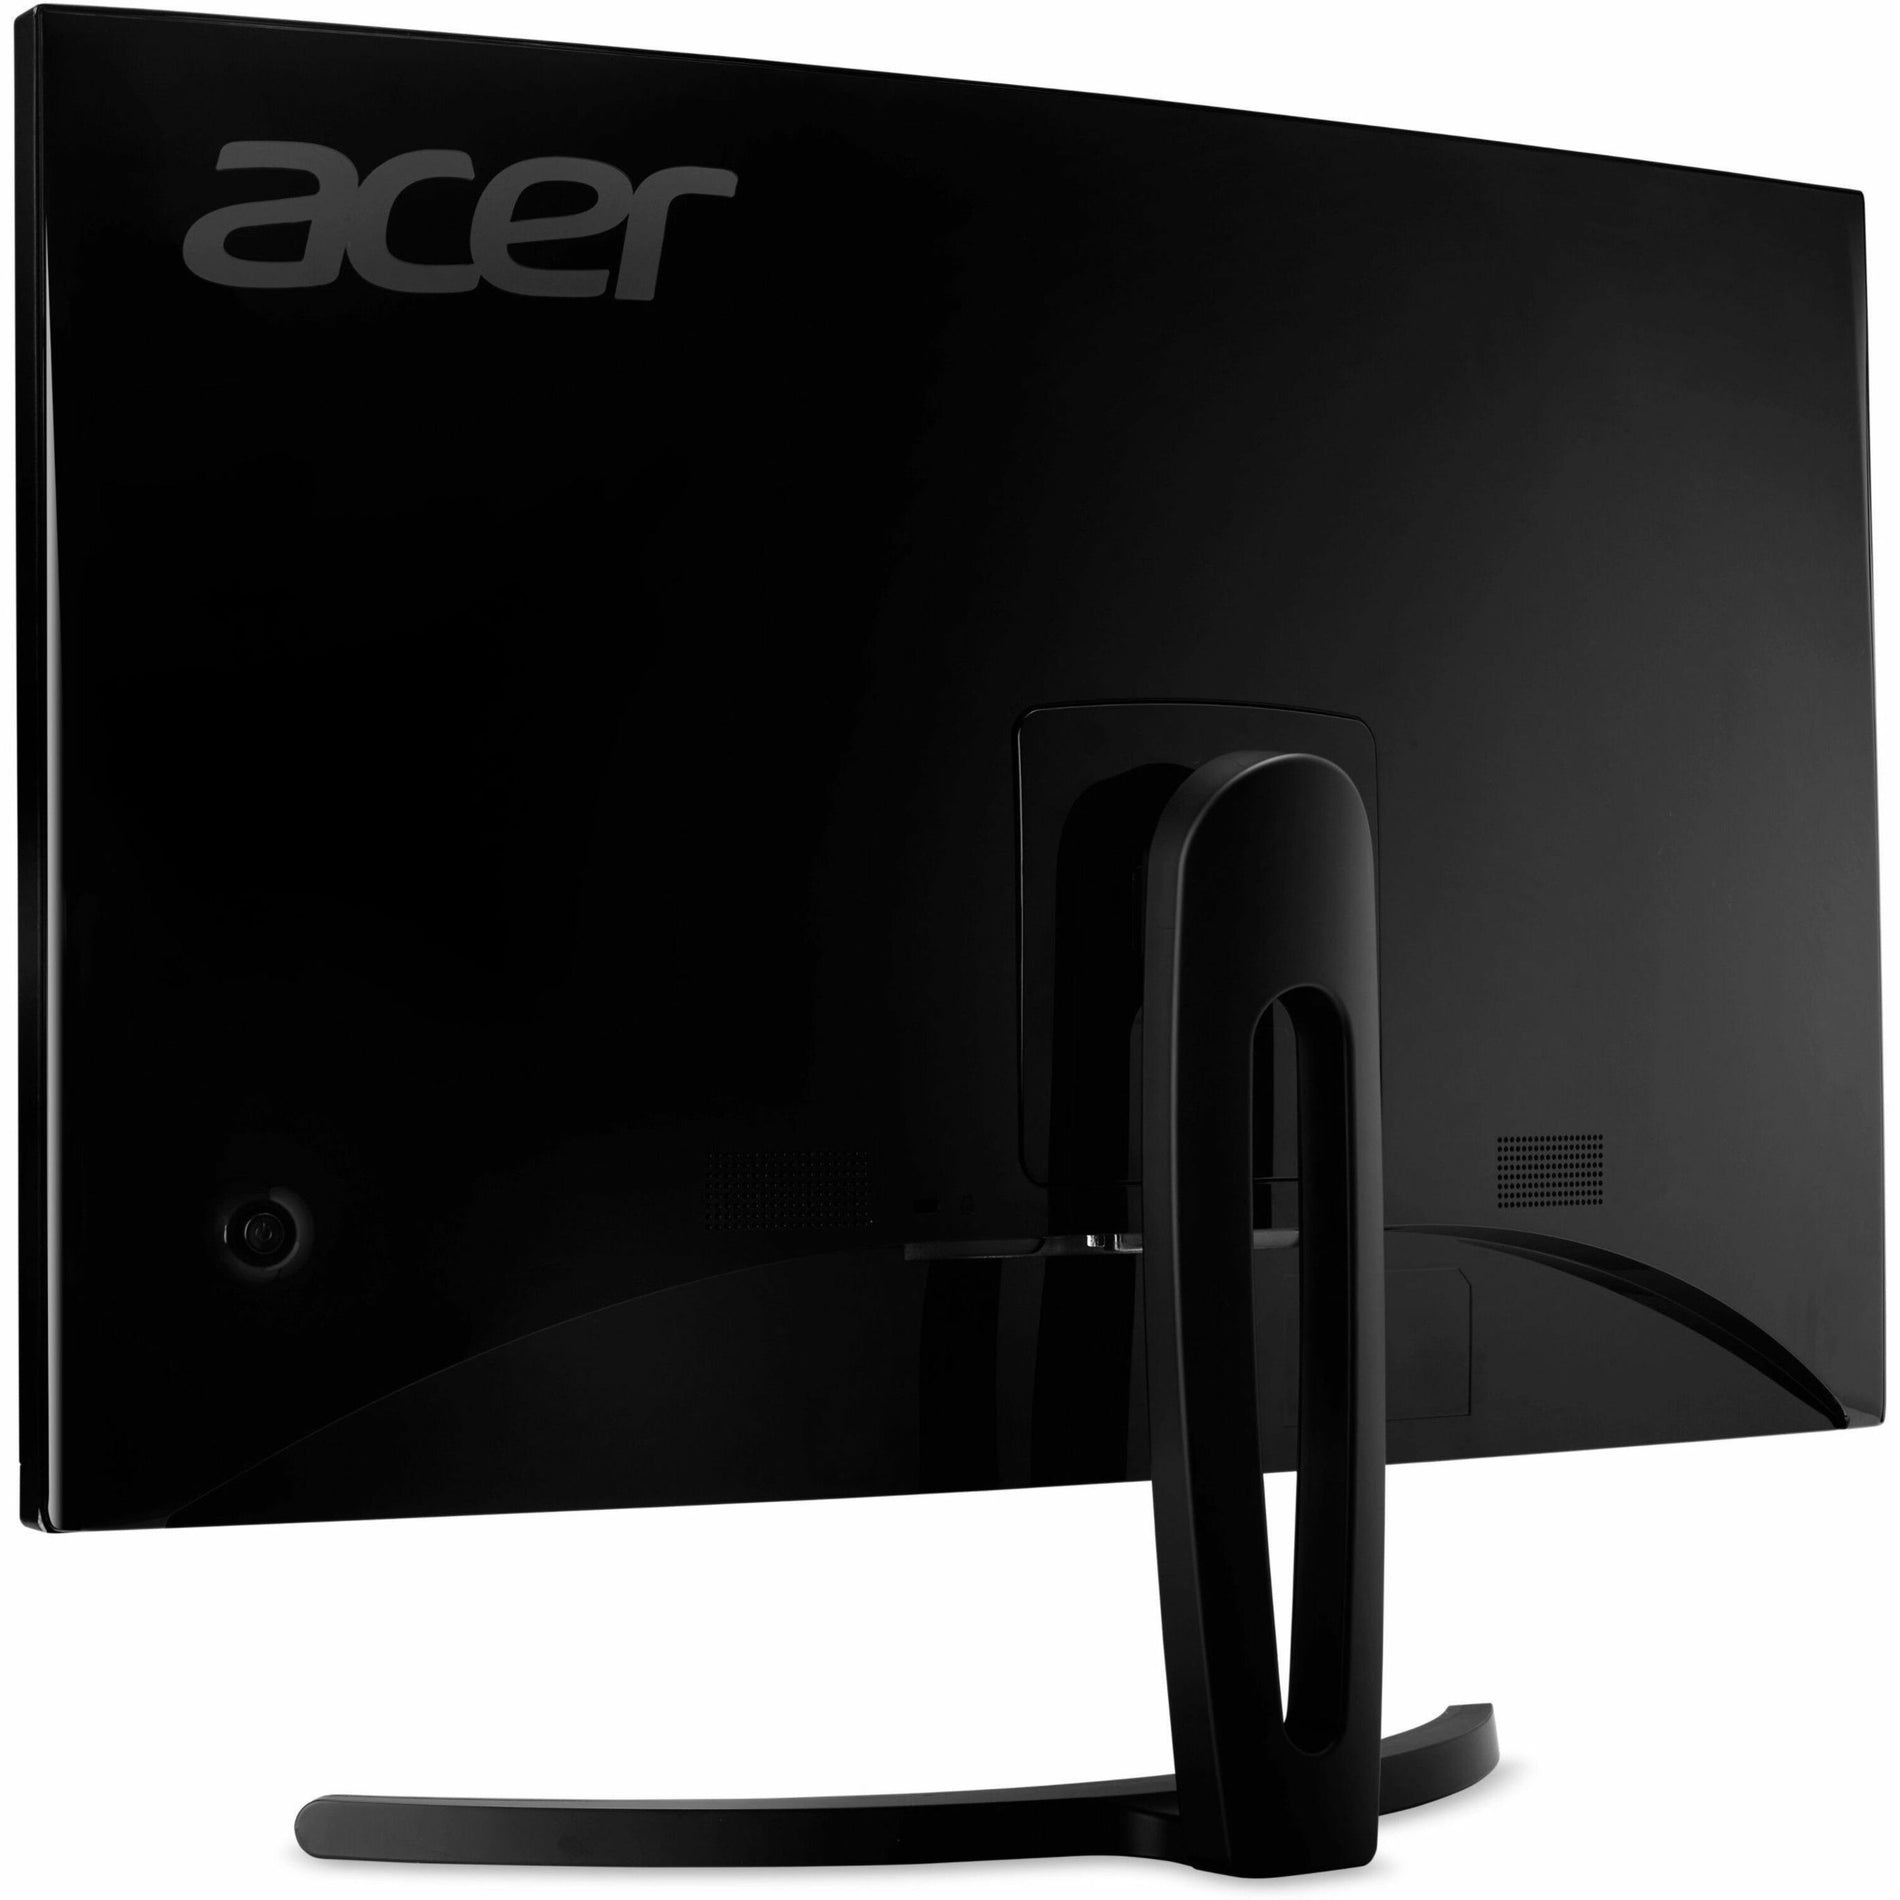 Acer UM.HE3AA.B01 ED273 B 27" LCD Monitor, Full HD, 1ms Response Time, HDMI & VGA Inputs